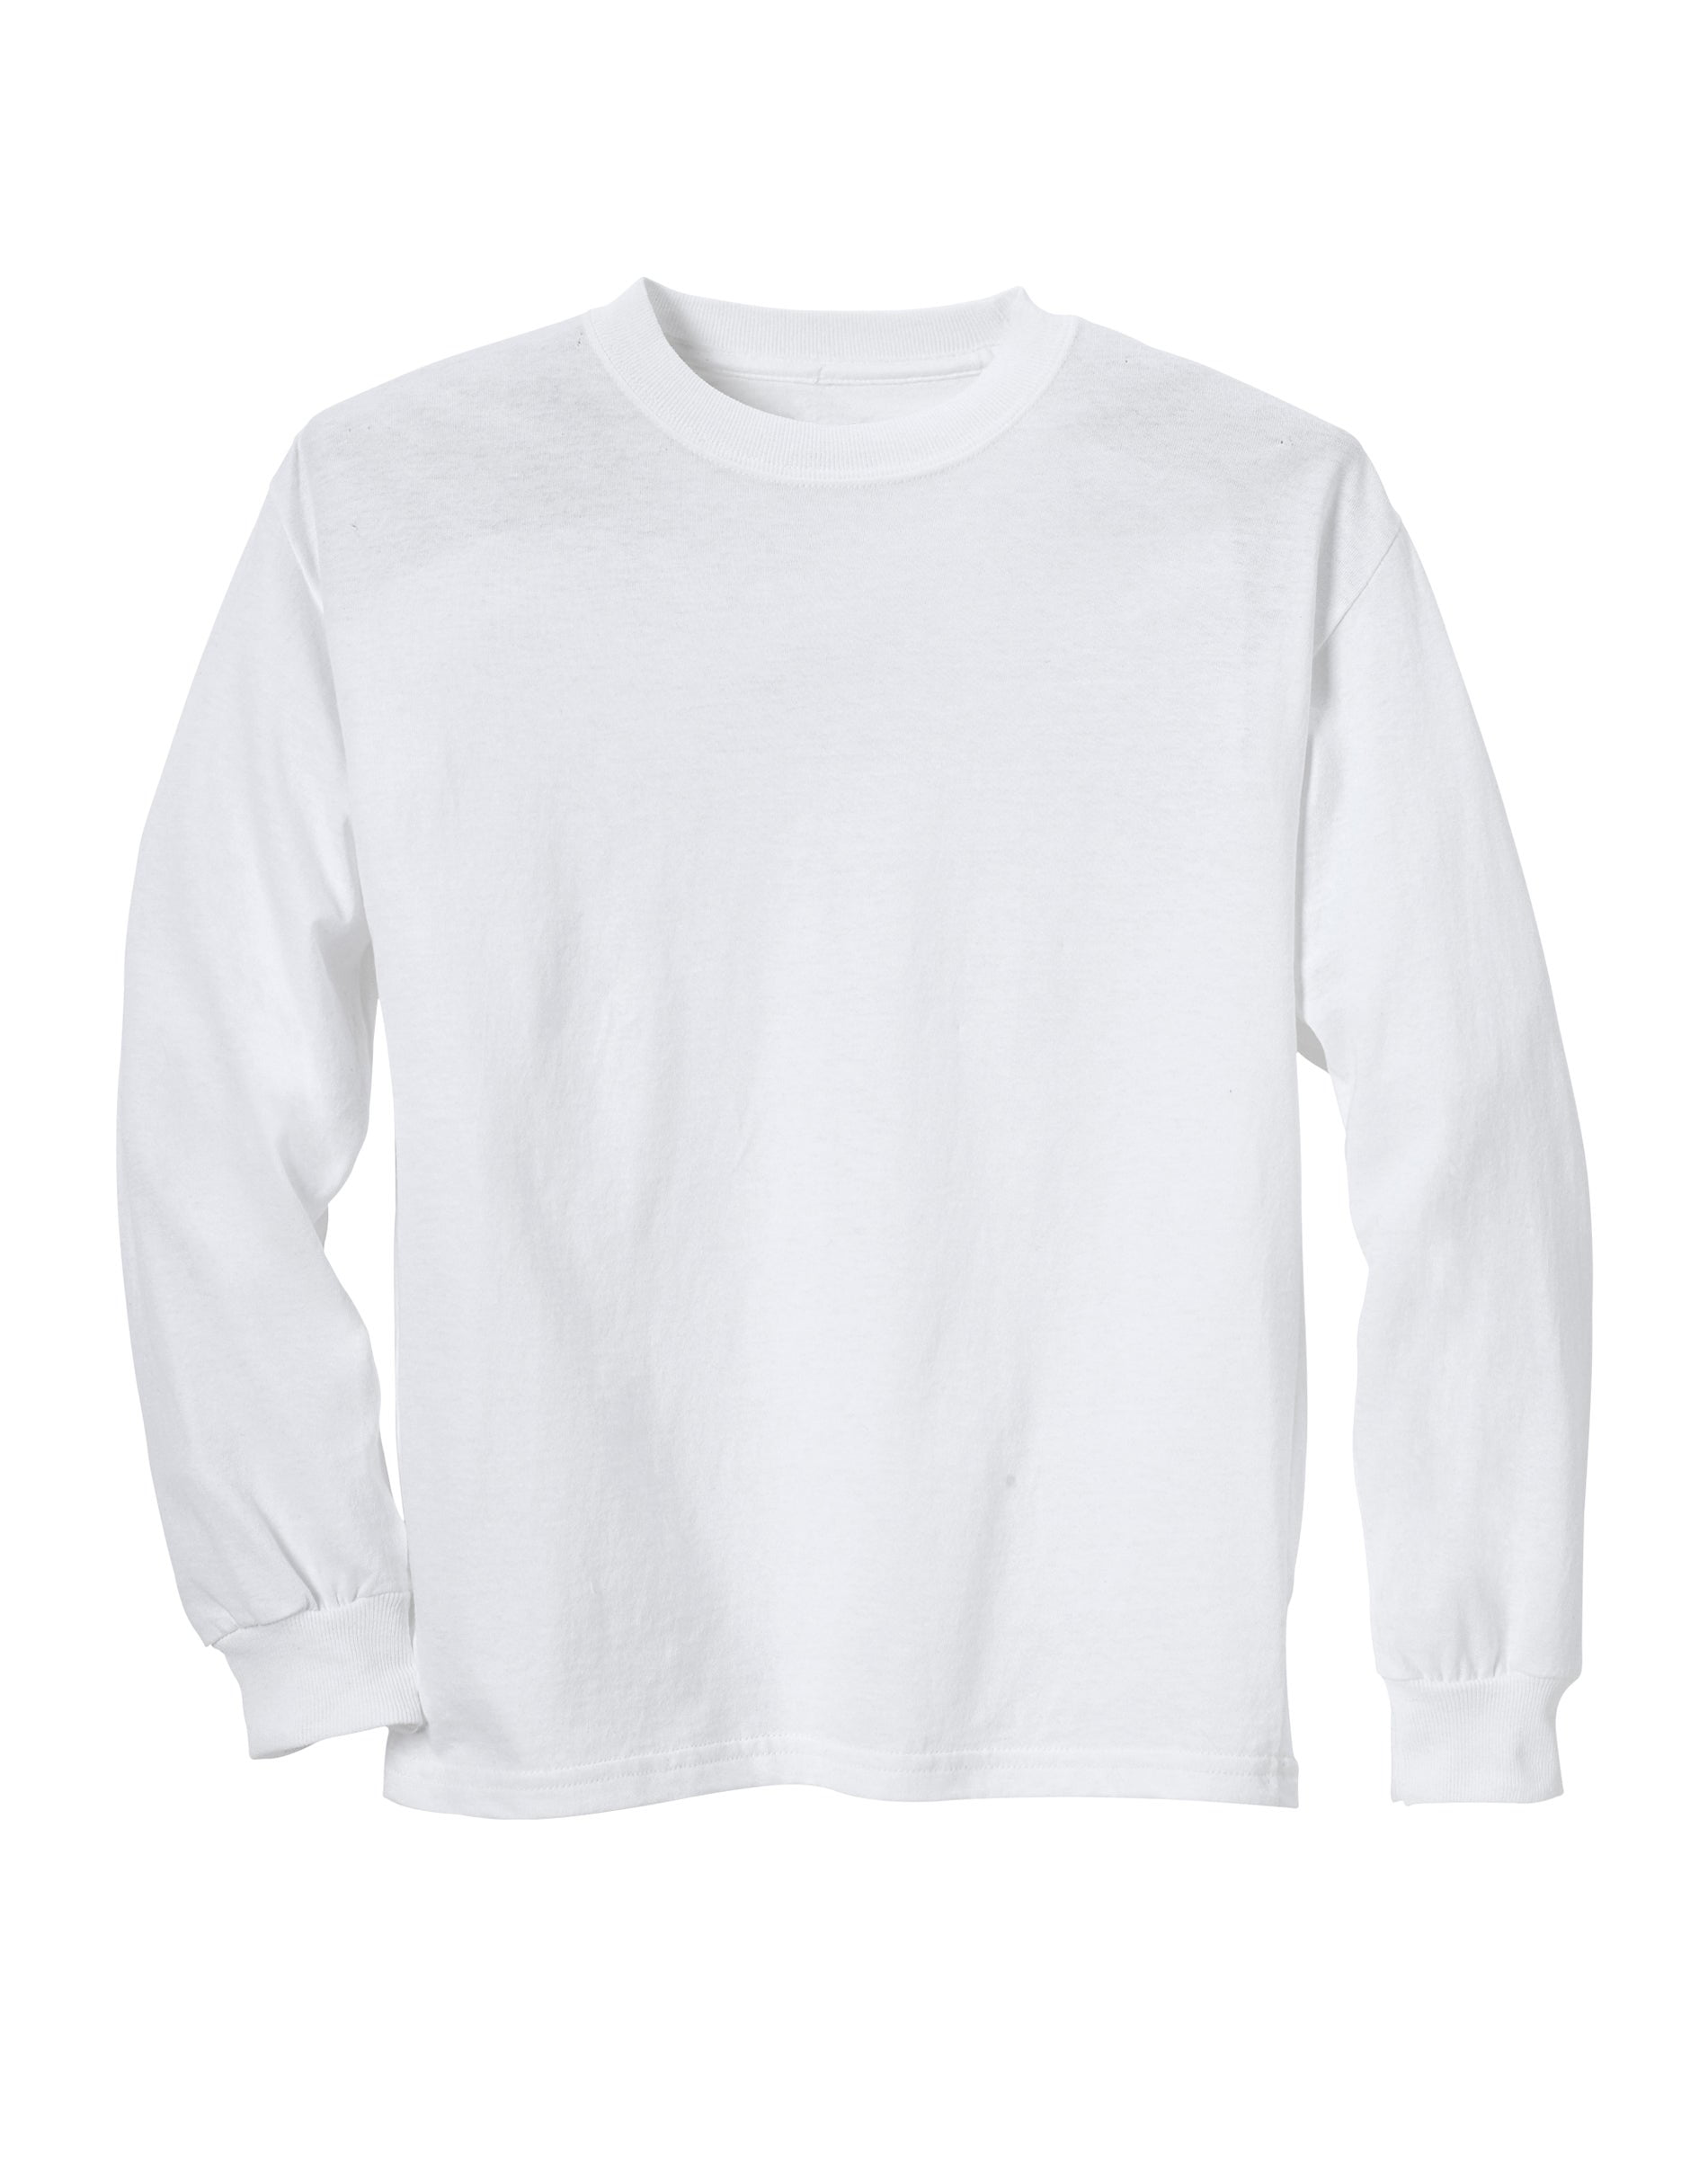 Quality Boys Kids 100% Cotton White Blue Long Sleeve Shirt Top 3-13 Years